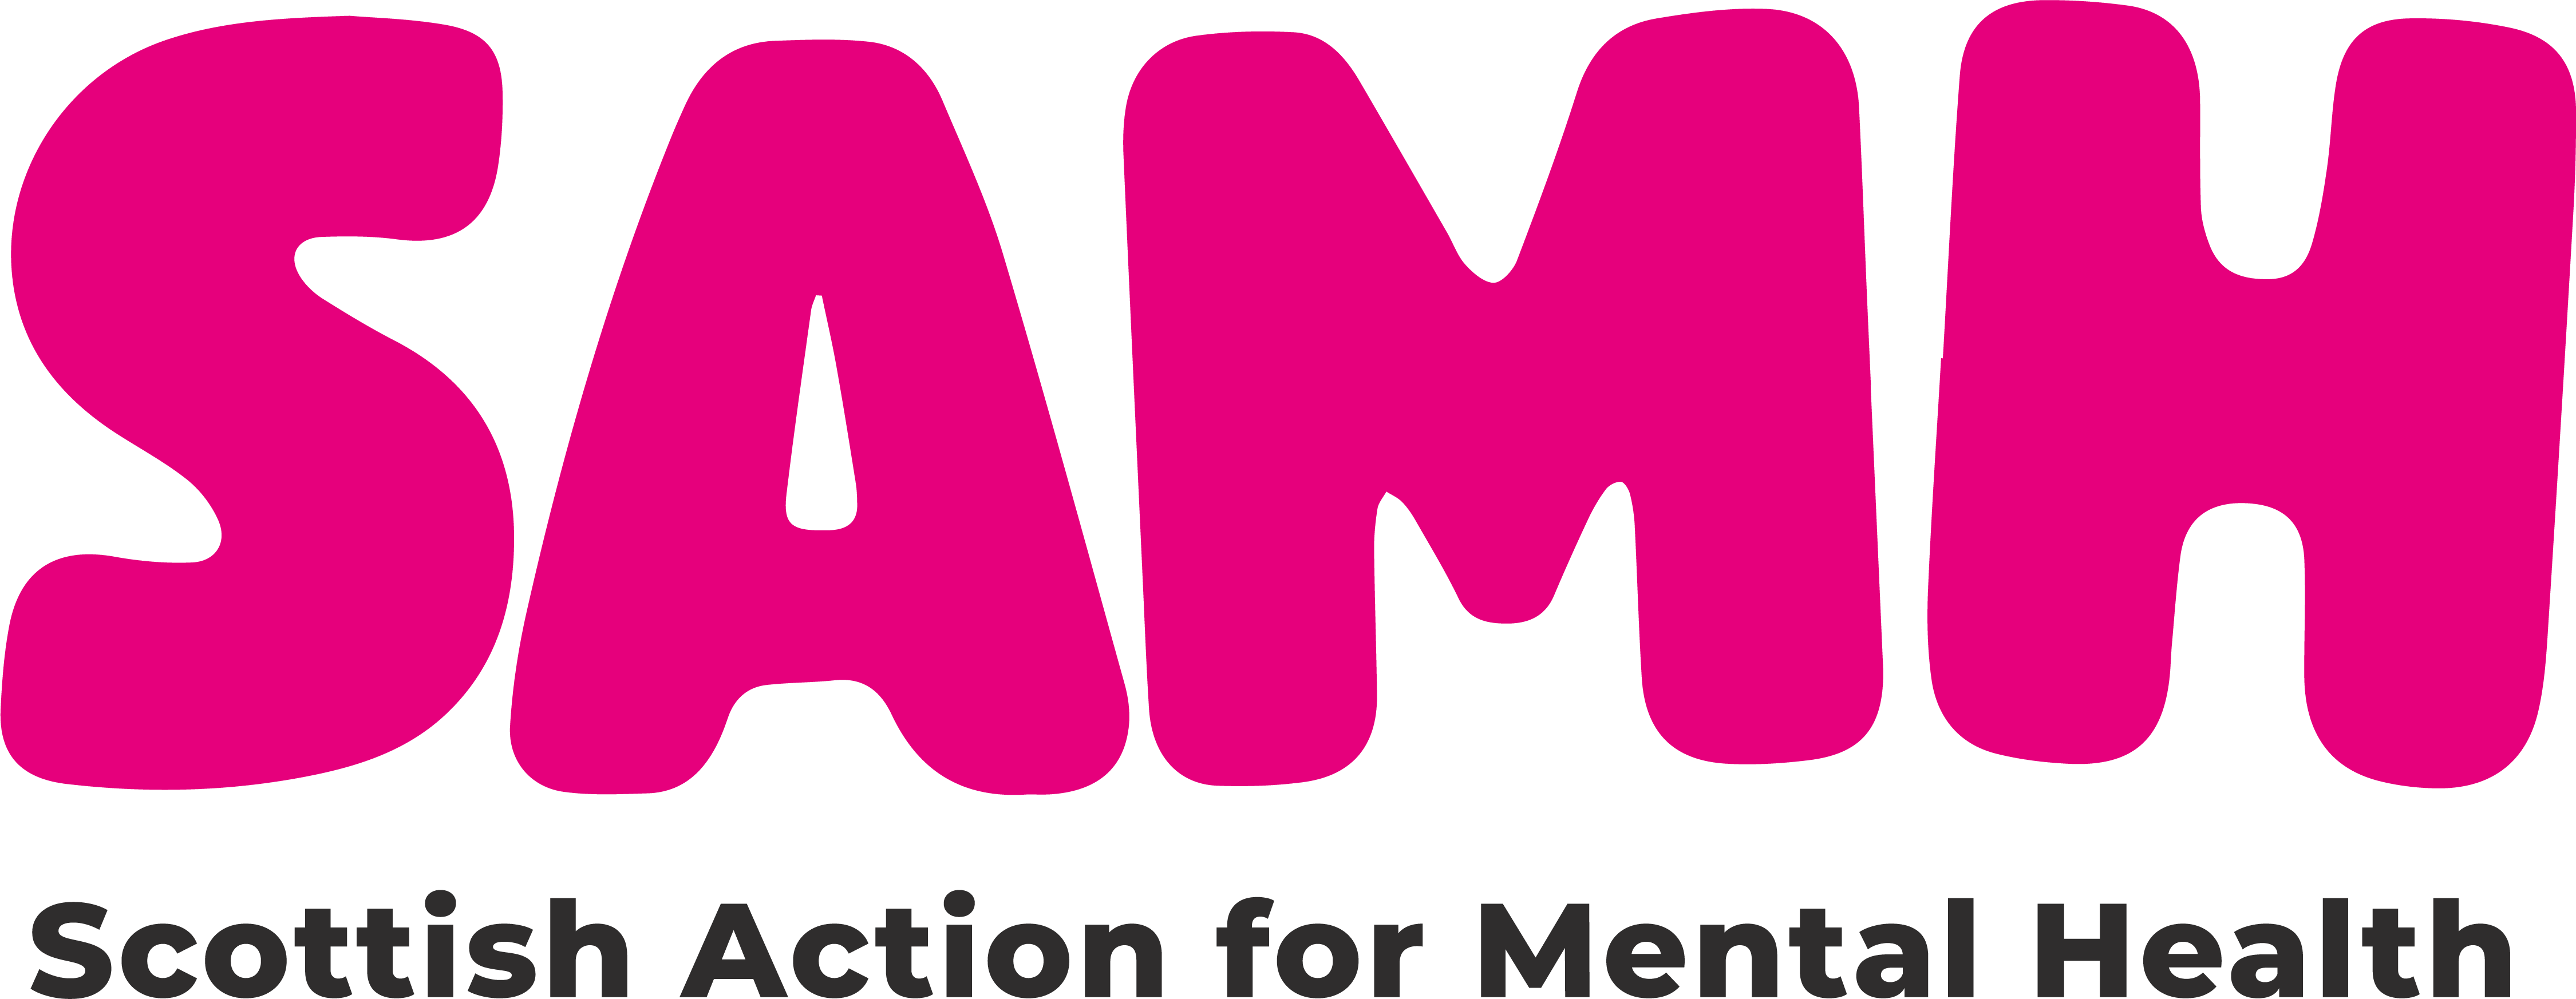 Scottish Action for Mental Health Logo